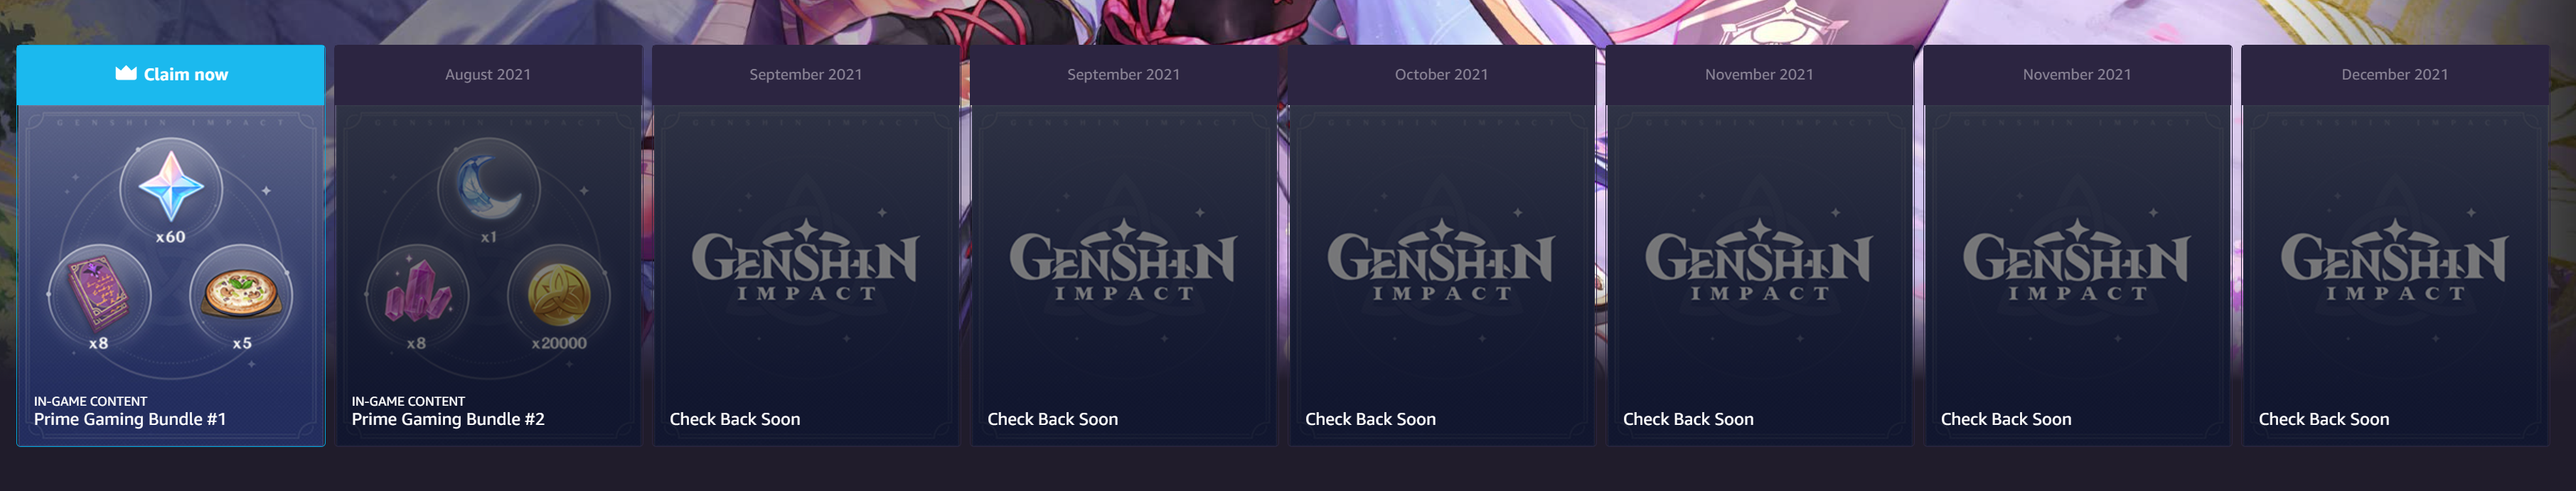 Genshin impact codes july 2021